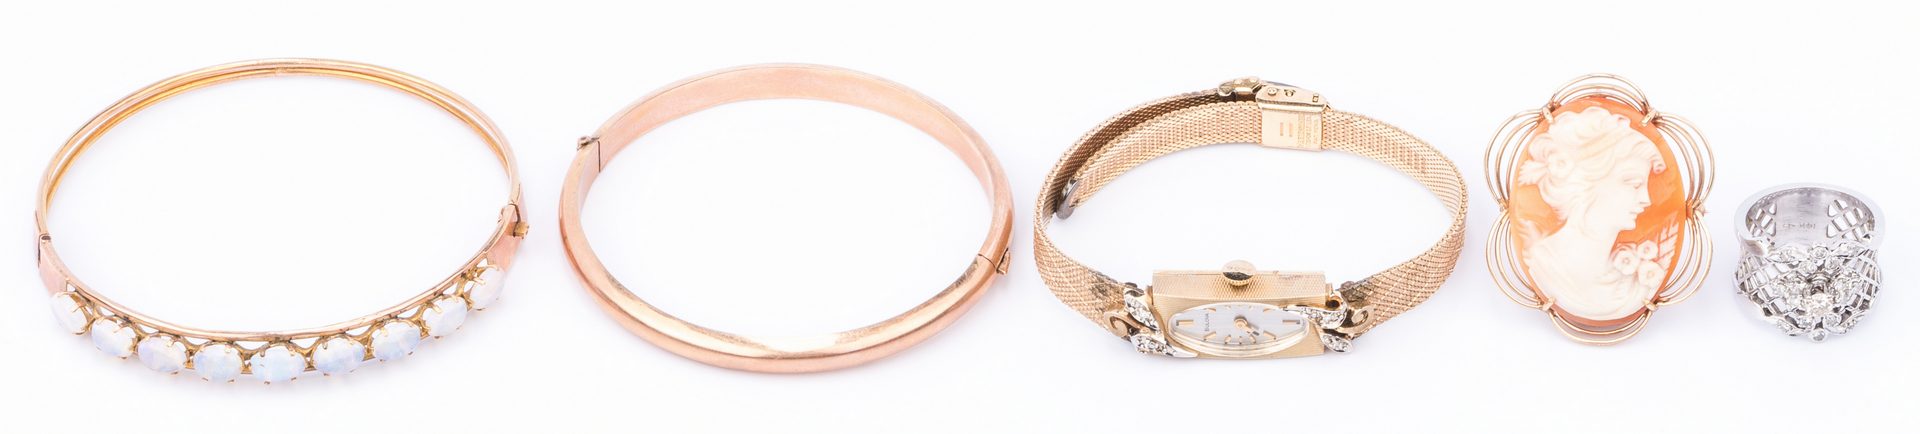 Lot 851: Five Items Ladies Gold Jewelry